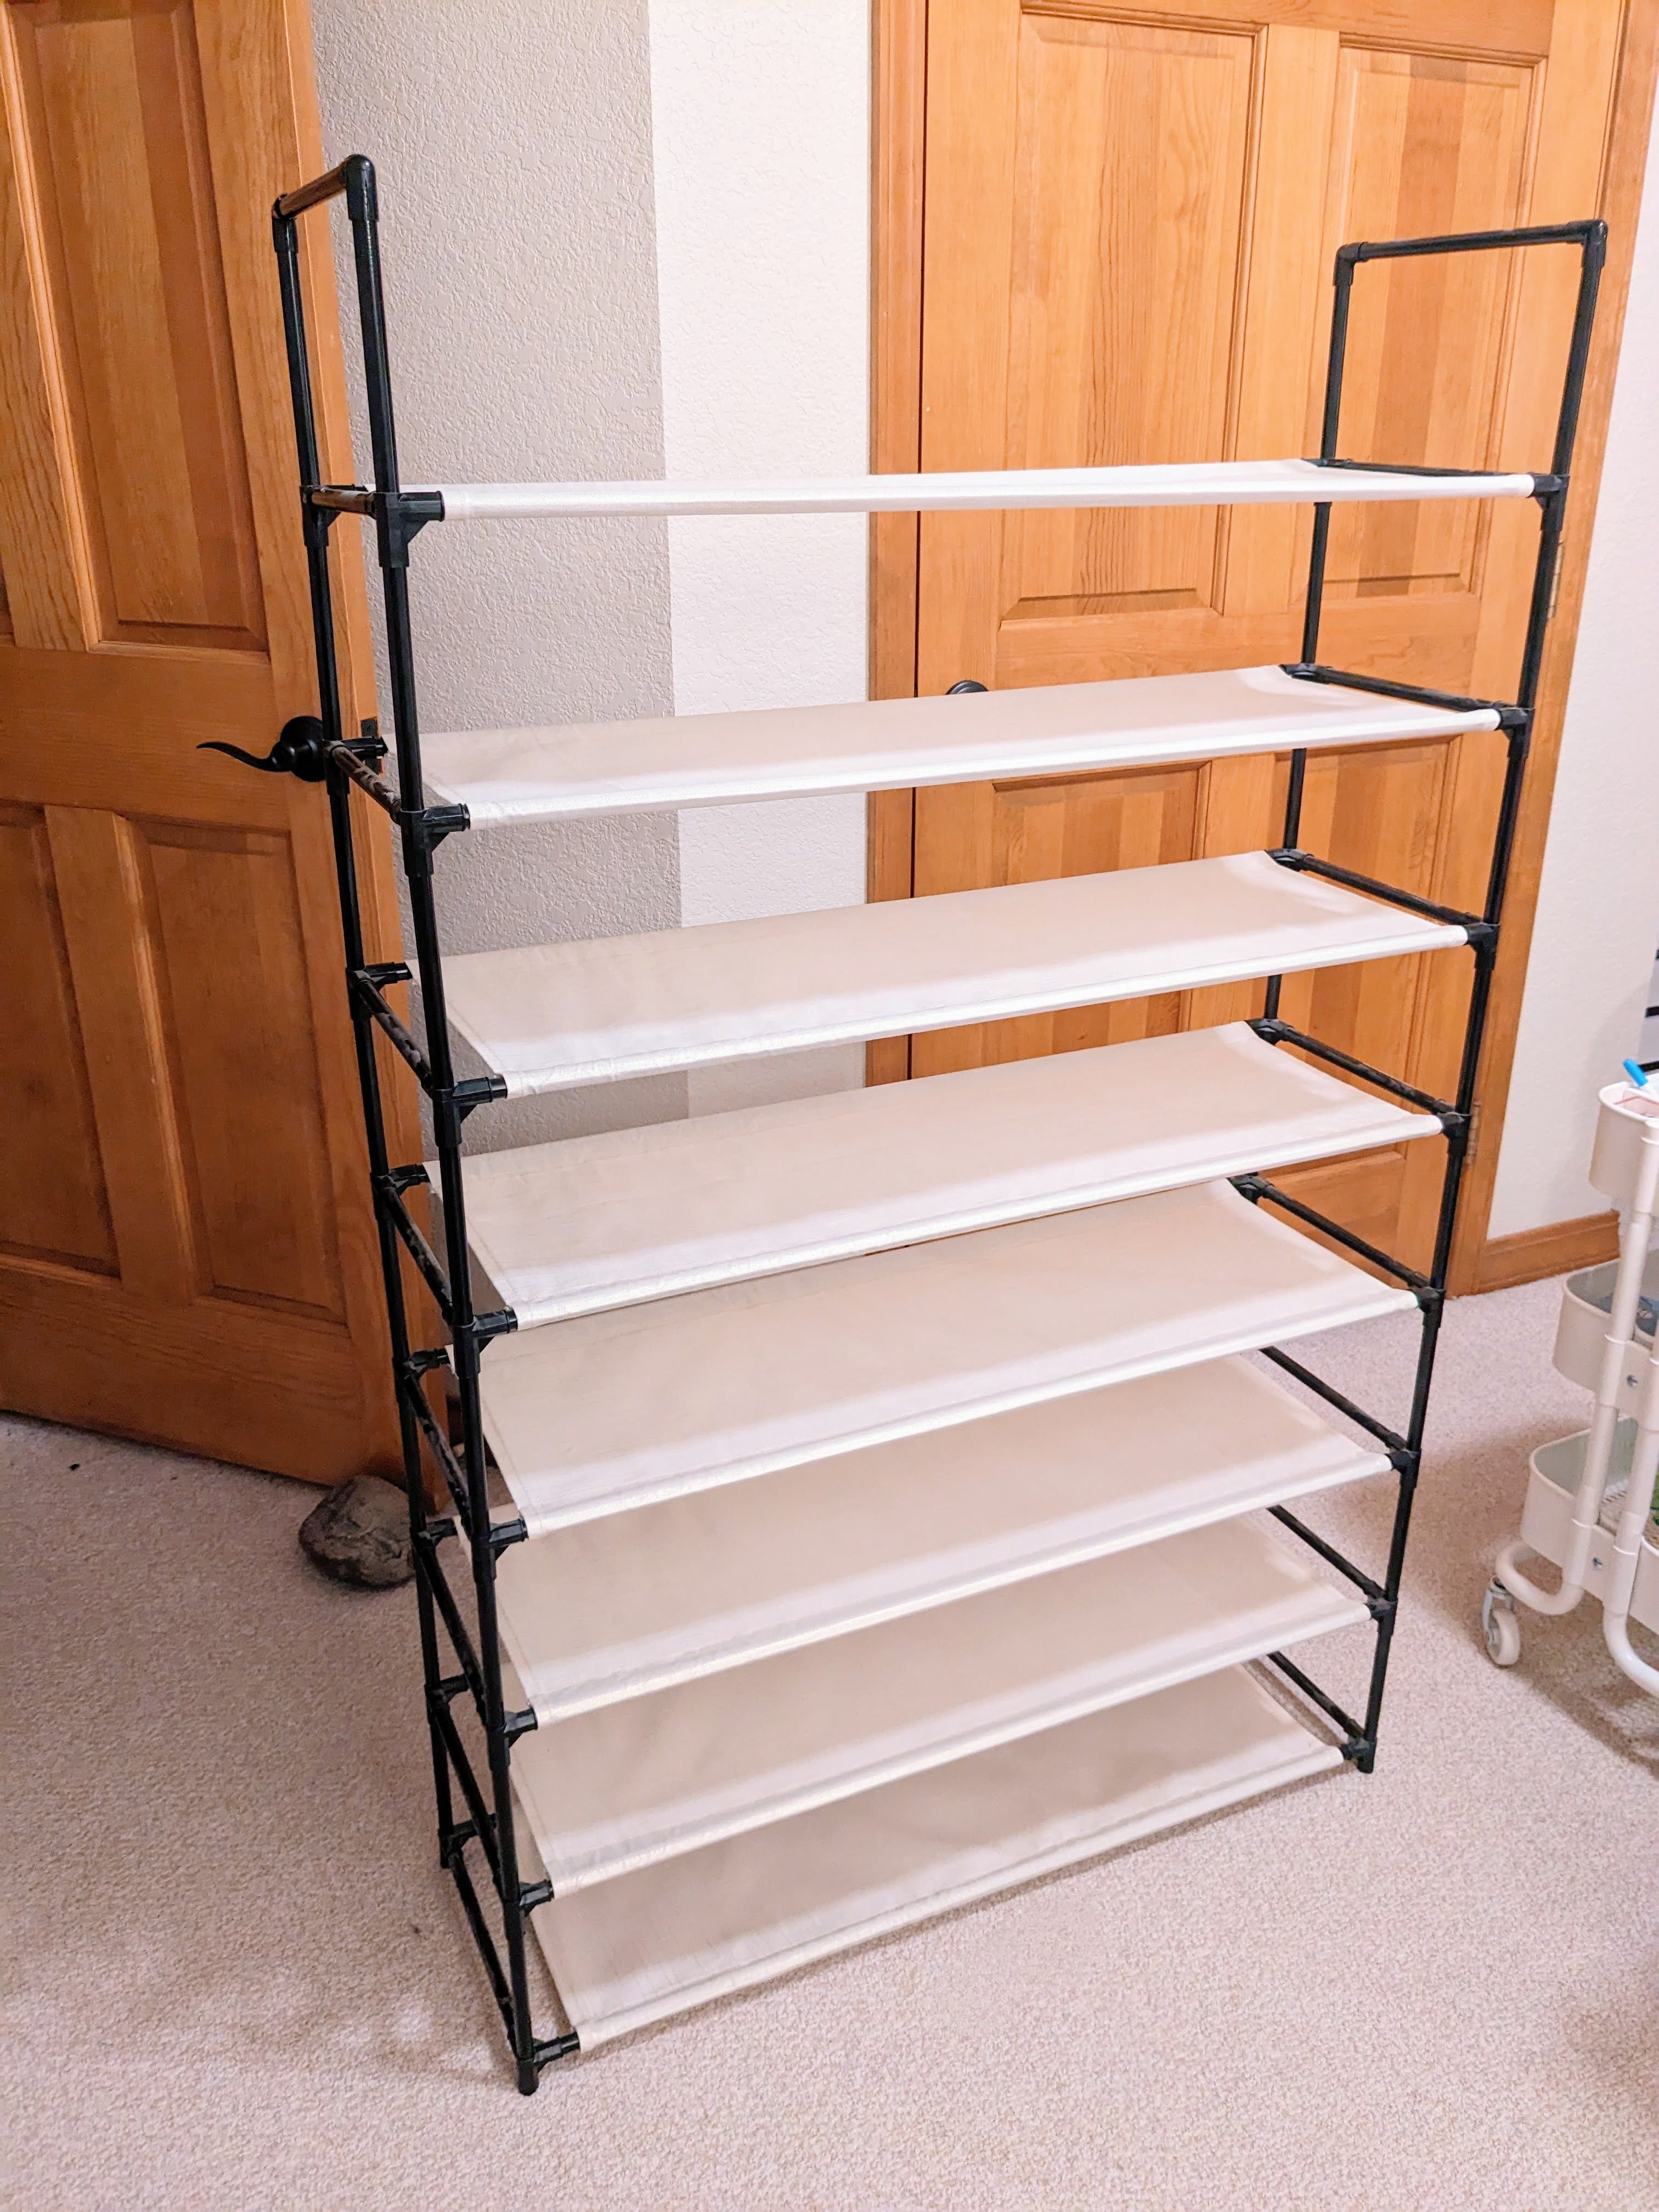 DIY Update: The Ladder Shoe Shelf